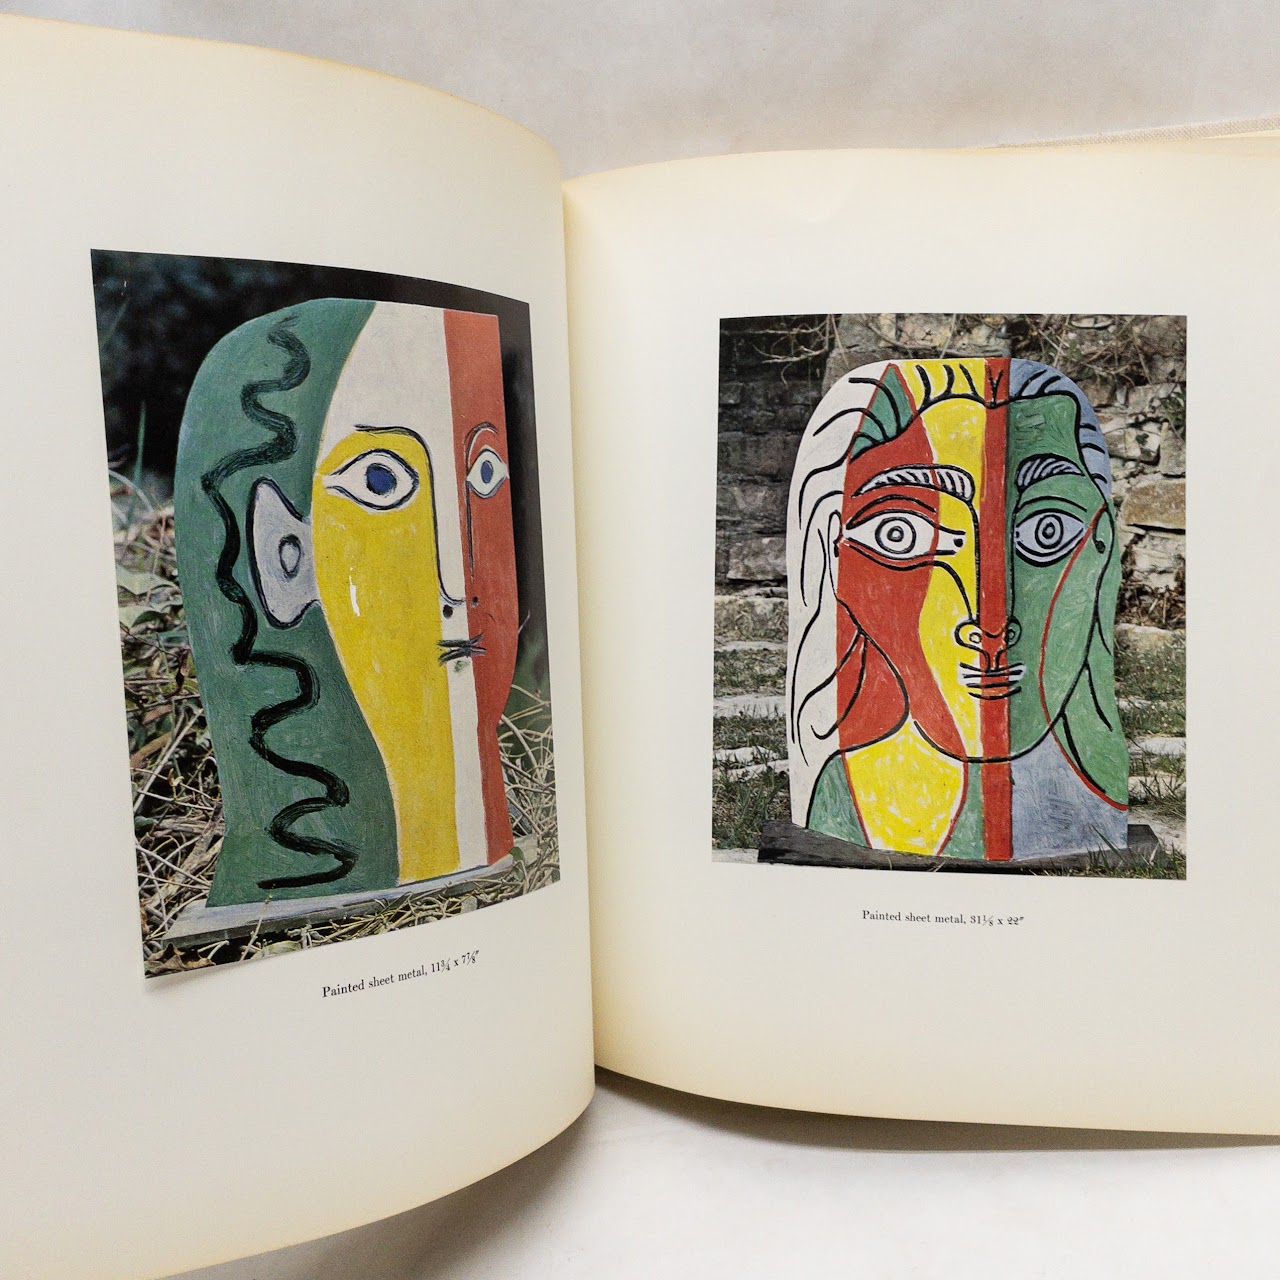 Picasso: Women. Cannes & Mougins, 1954-1963